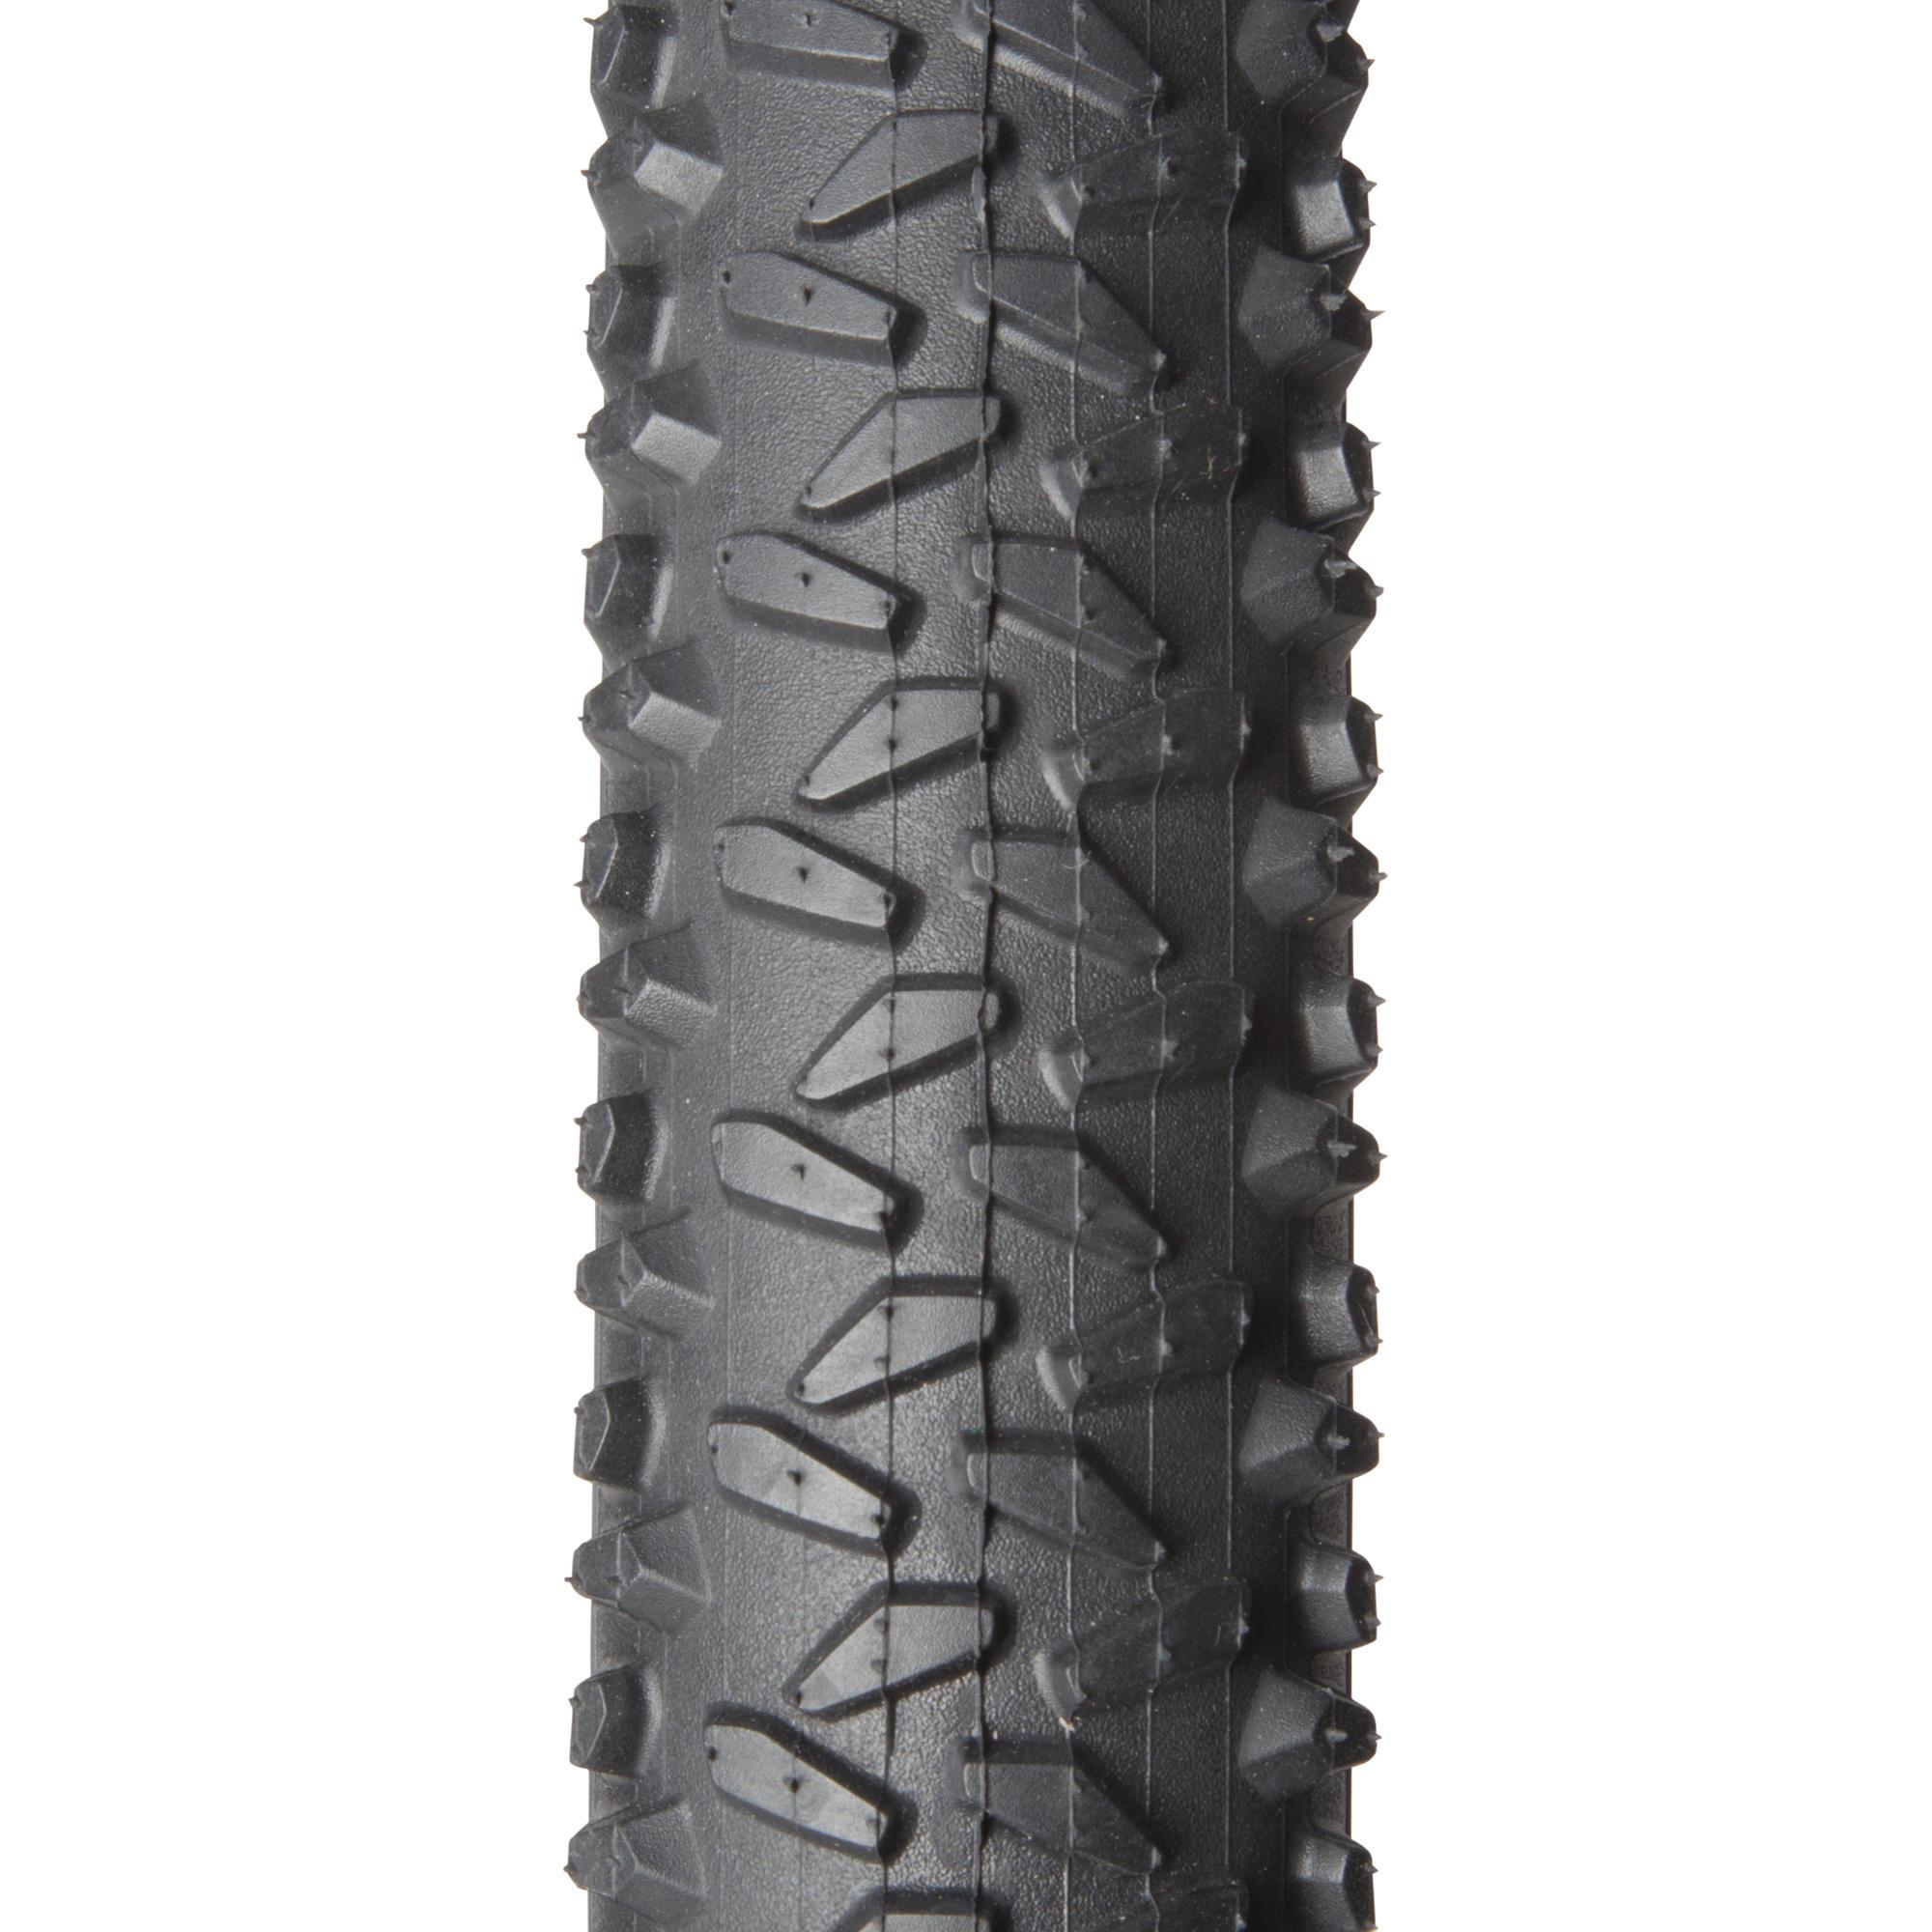 mountain bike tire 27.5